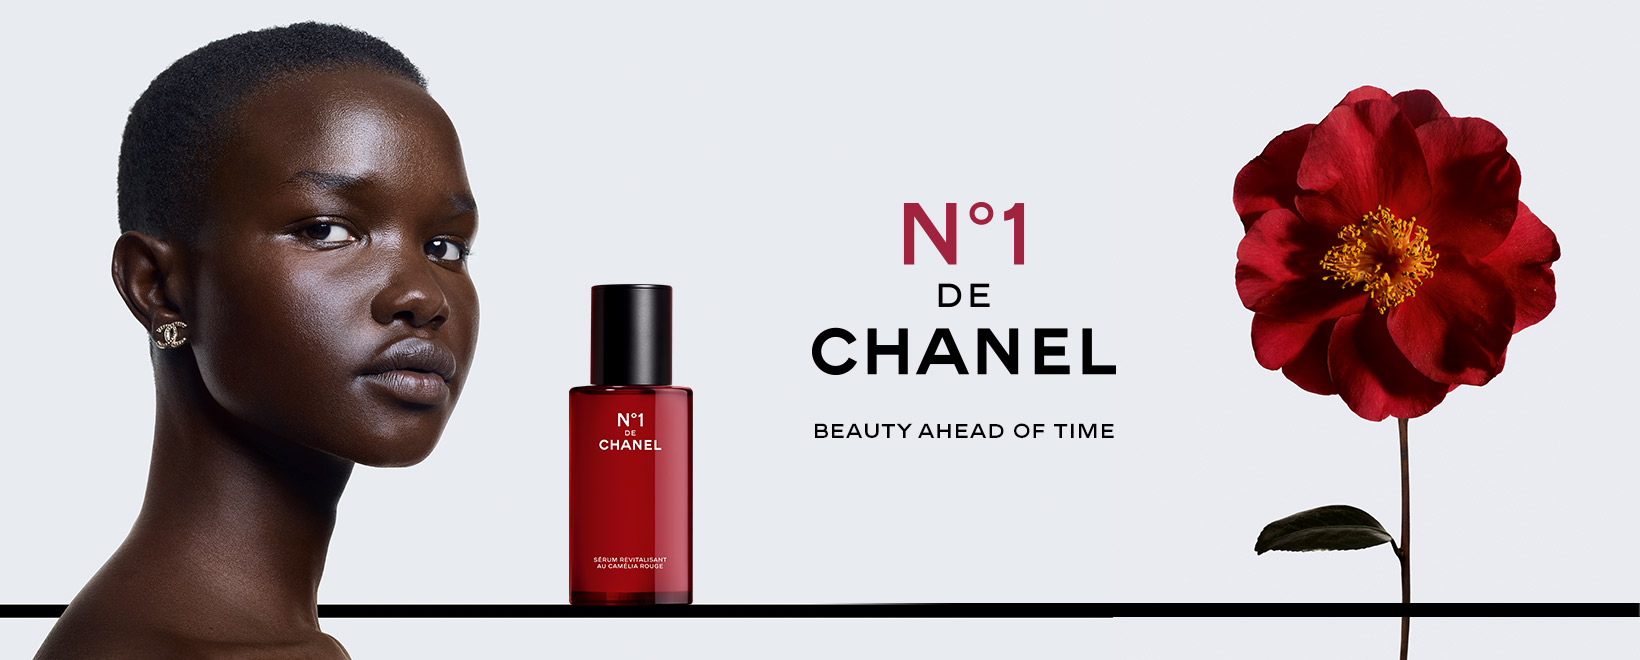 Chanel  N1 DE CHANEL REVITALIZING FOUNDATION Illuminates  Moisturizes   Protects